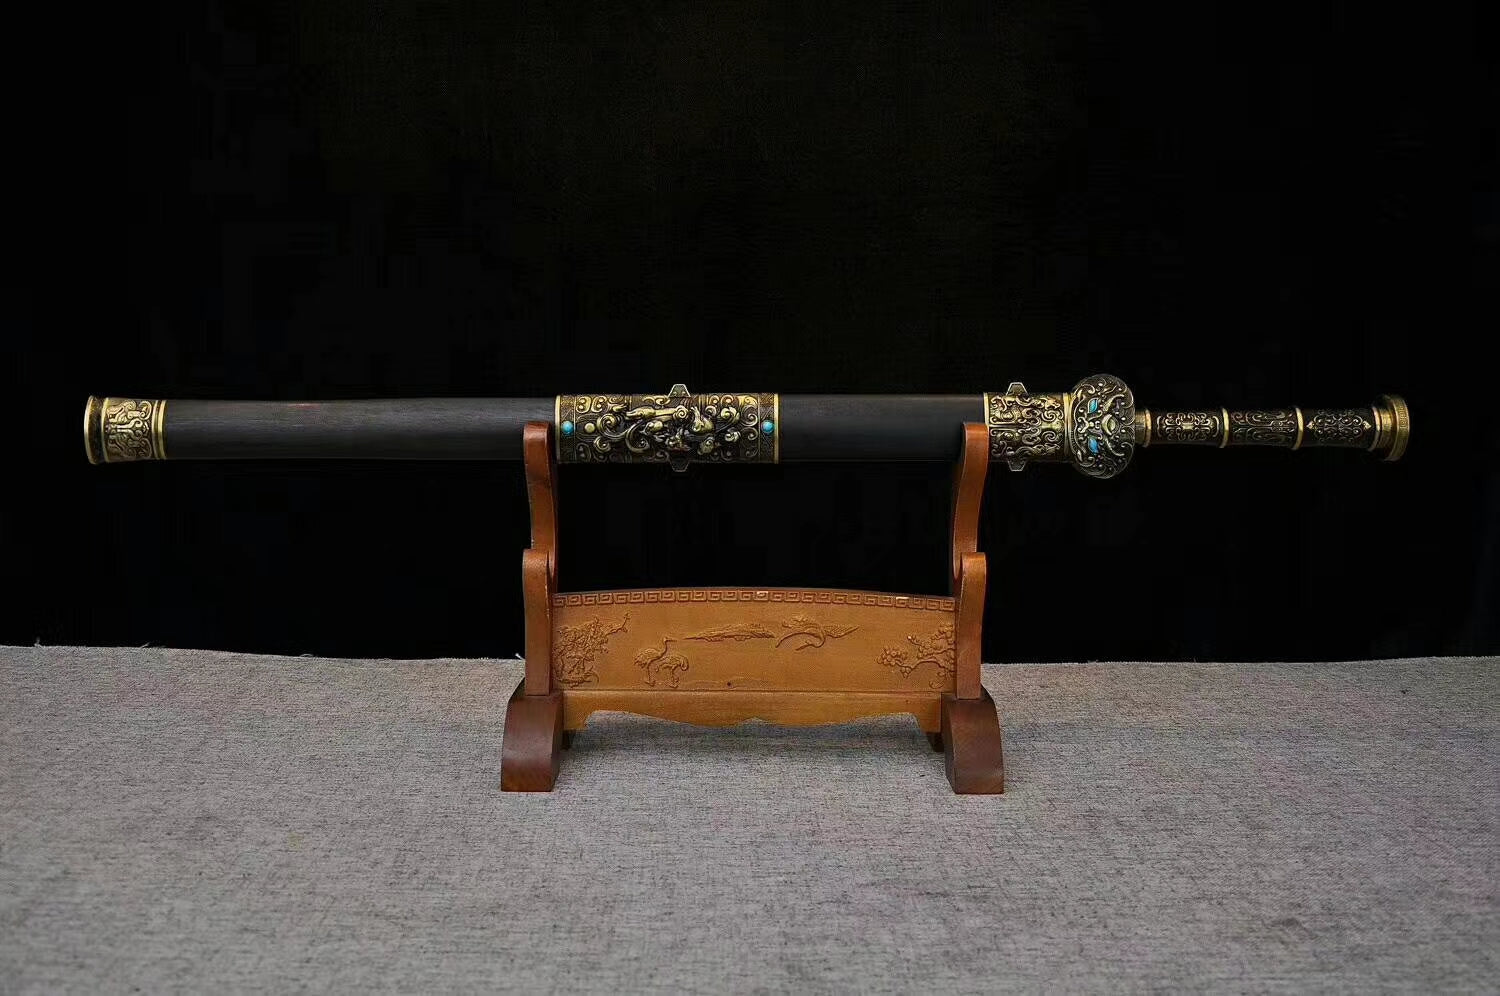 Fengyun sword,Folding pattern steel blade,Black scabbard,Alloy Handle - Chinese sword shop